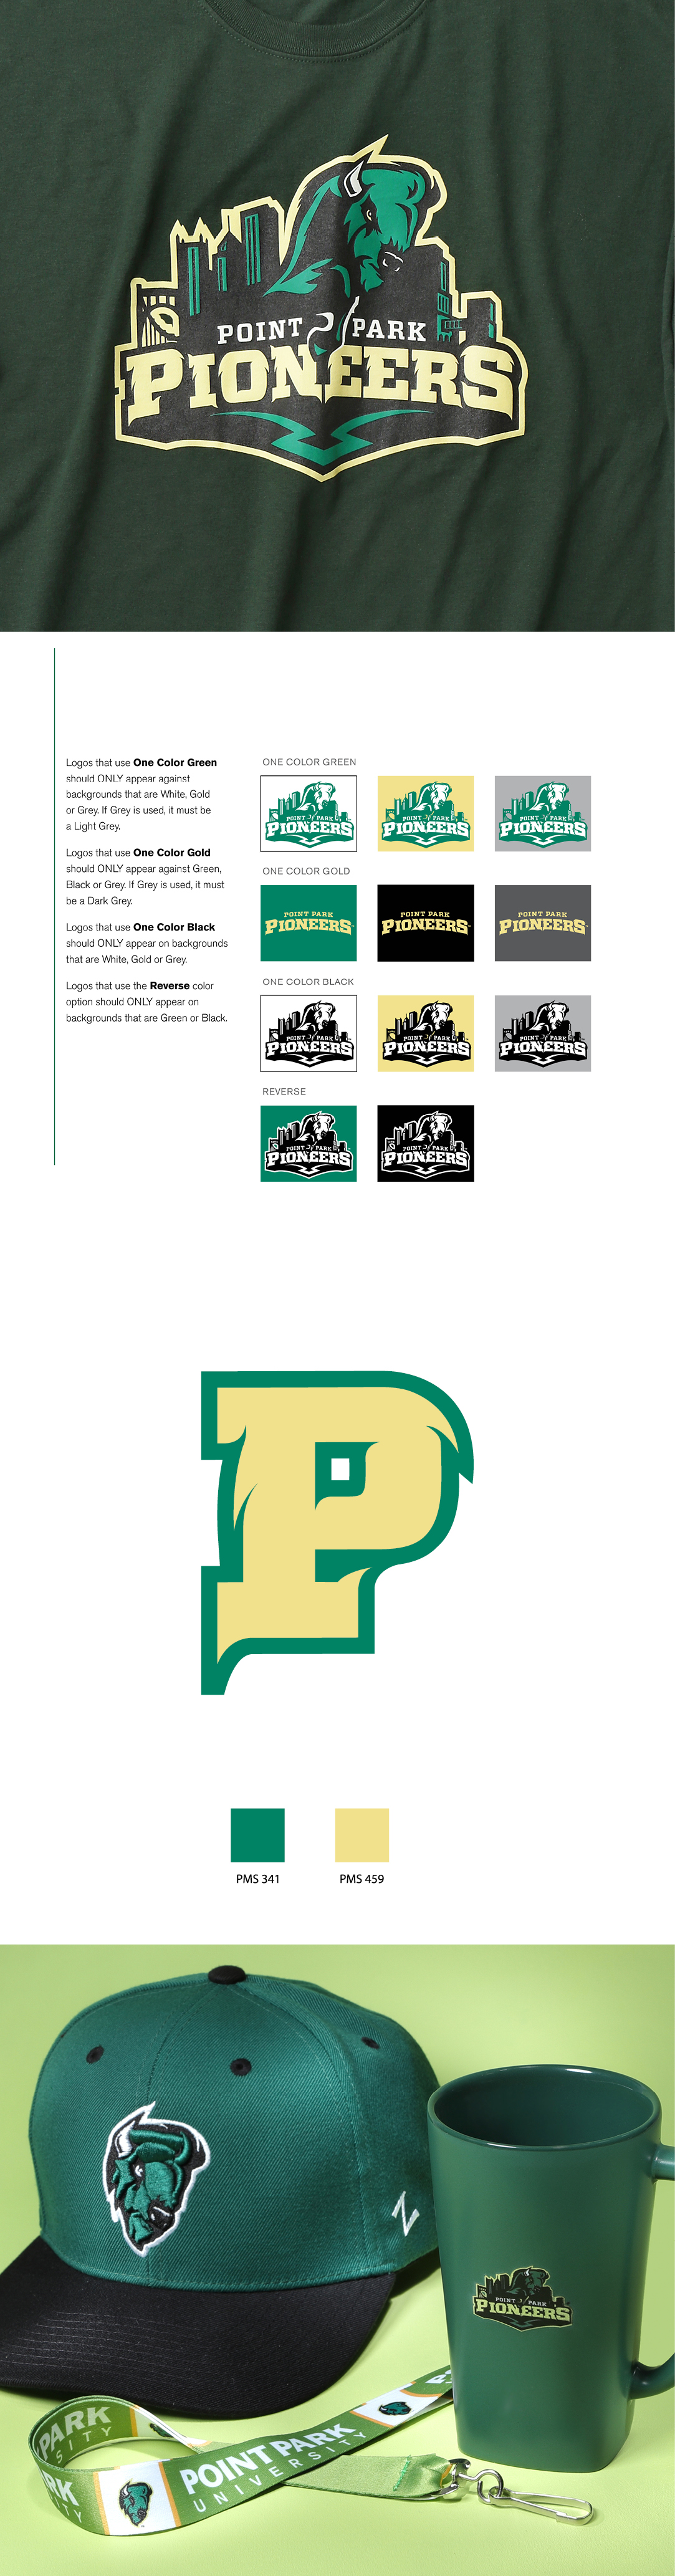 Point Park University Pioneers Brand